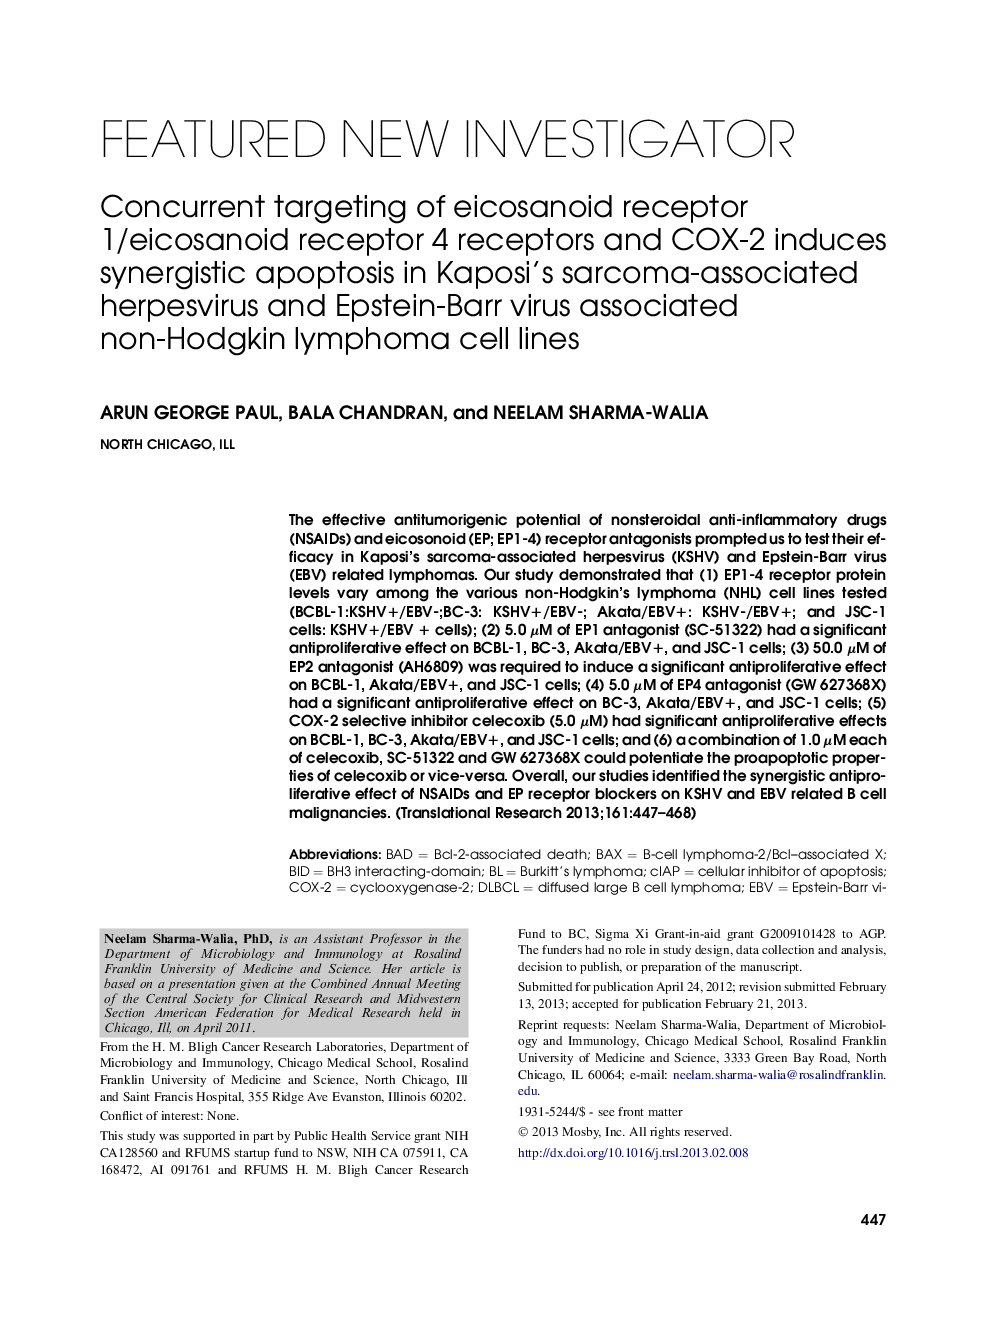 Concurrent targeting of eicosanoid receptor 1/eicosanoid receptor 4 receptors and COX-2 induces synergistic apoptosis in Kaposi's sarcoma-associated herpesvirus and Epstein-Barr virus associated non-Hodgkin lymphoma cell lines 